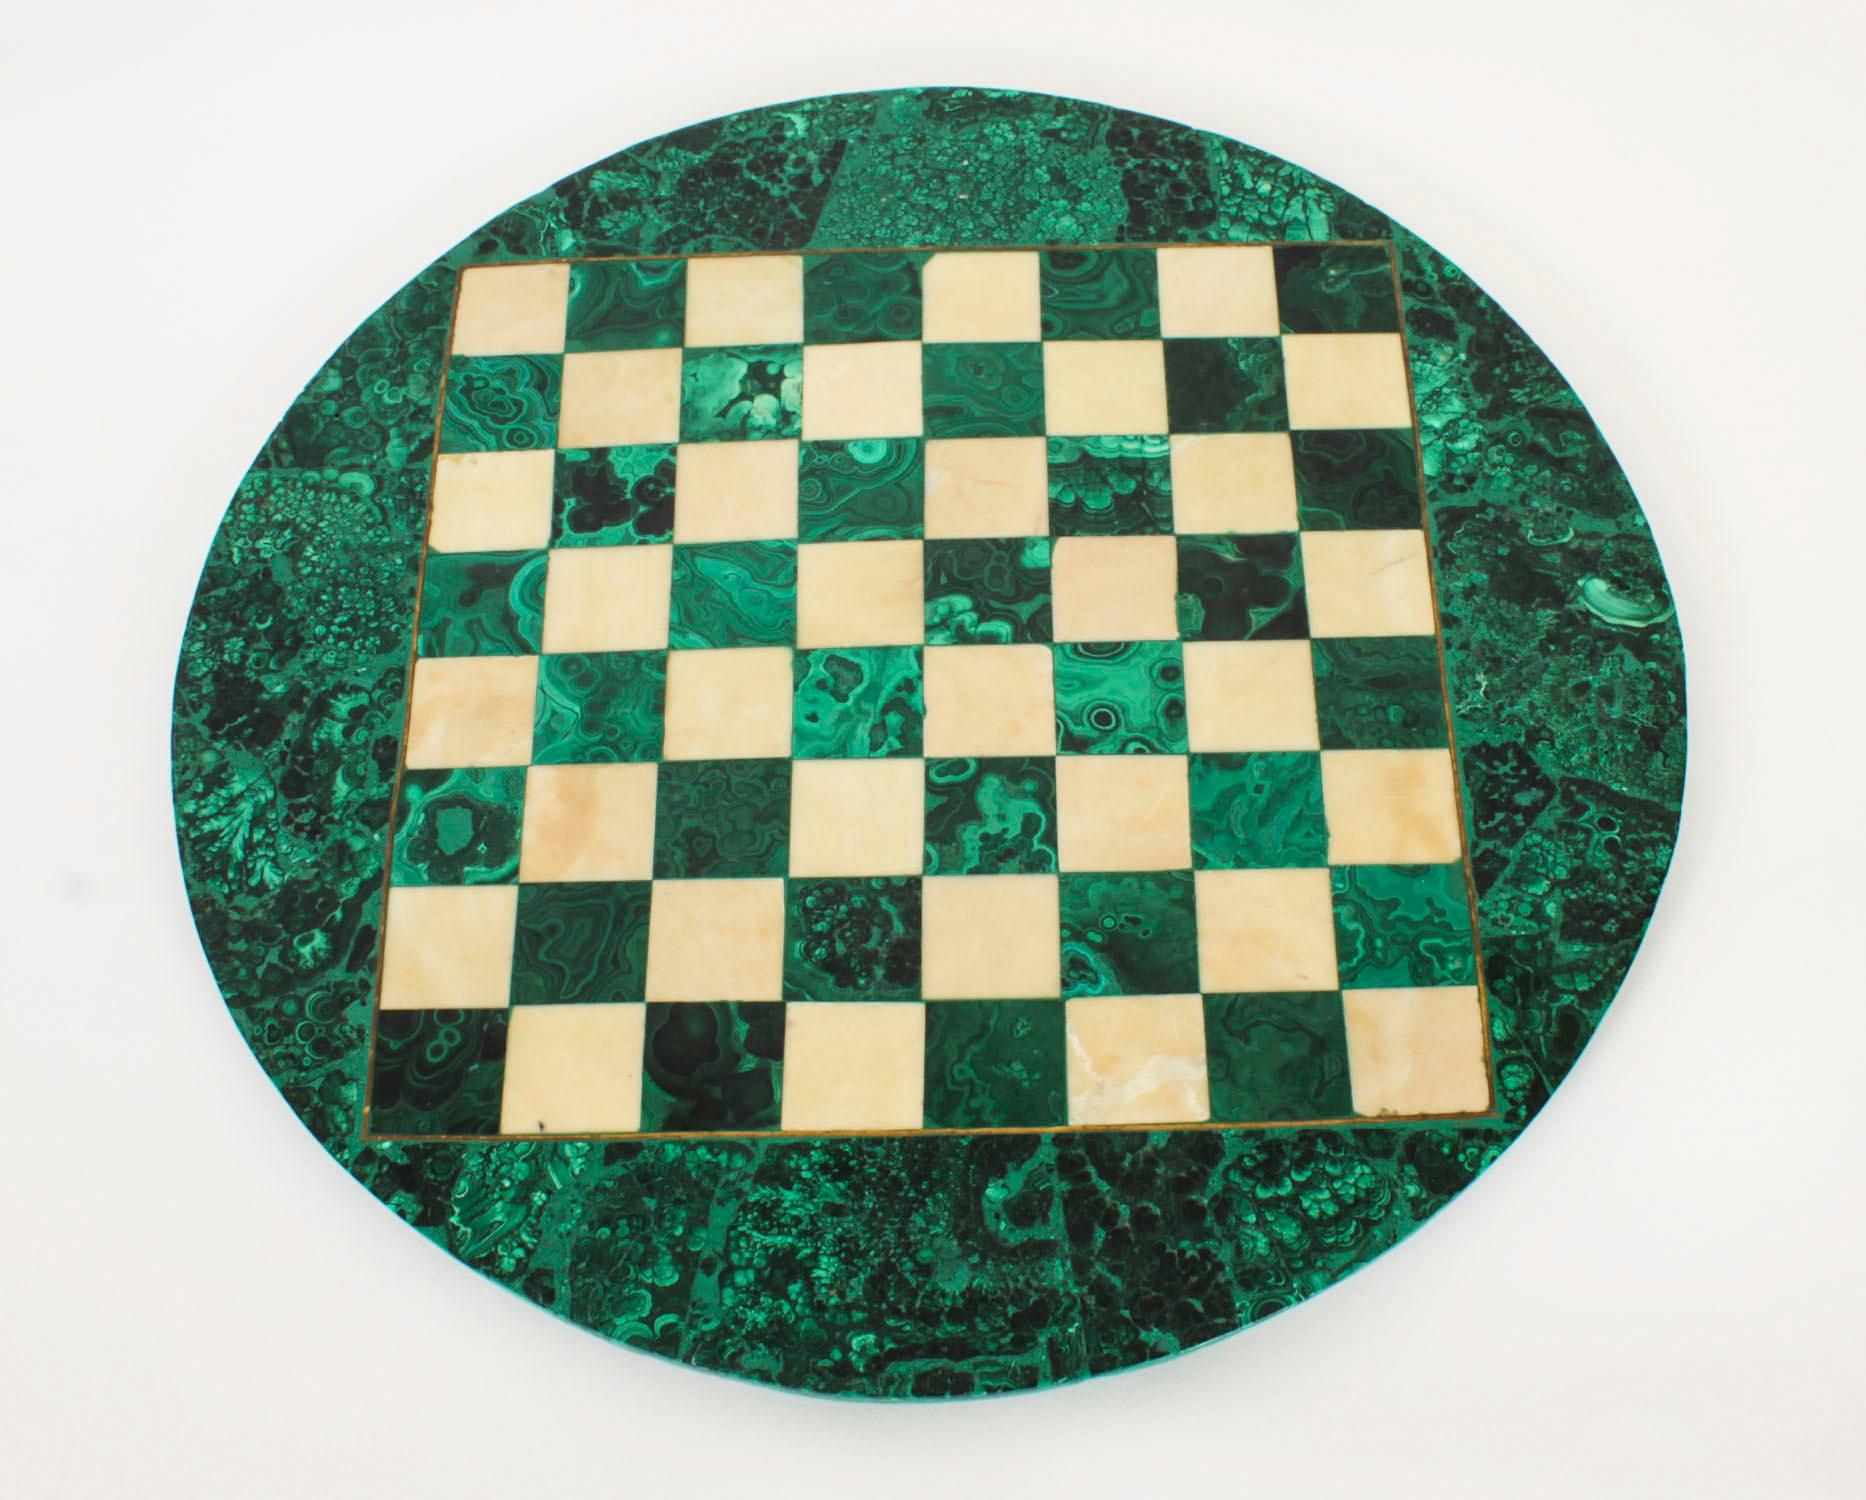 Early 20th Century Antique Malachite & Carrara Marble Chess Board c.1920 20th Century